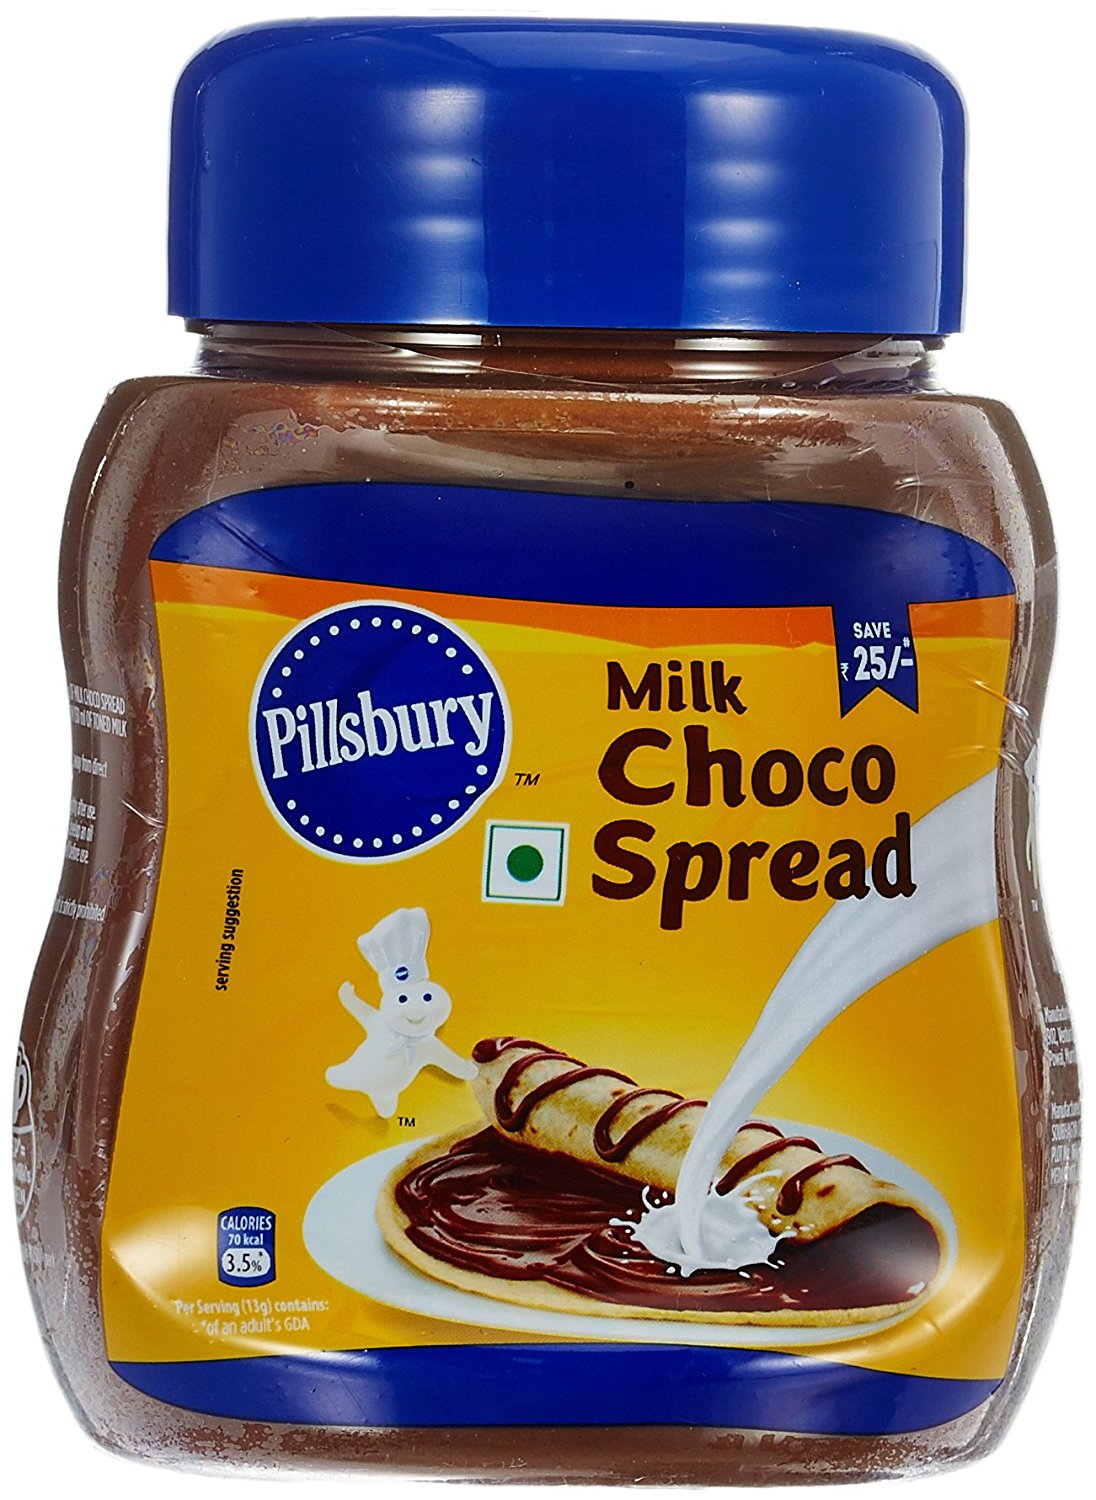 Amazon: Buy Pillsbury Milk Choco Spread, 290g at Rs 179 only